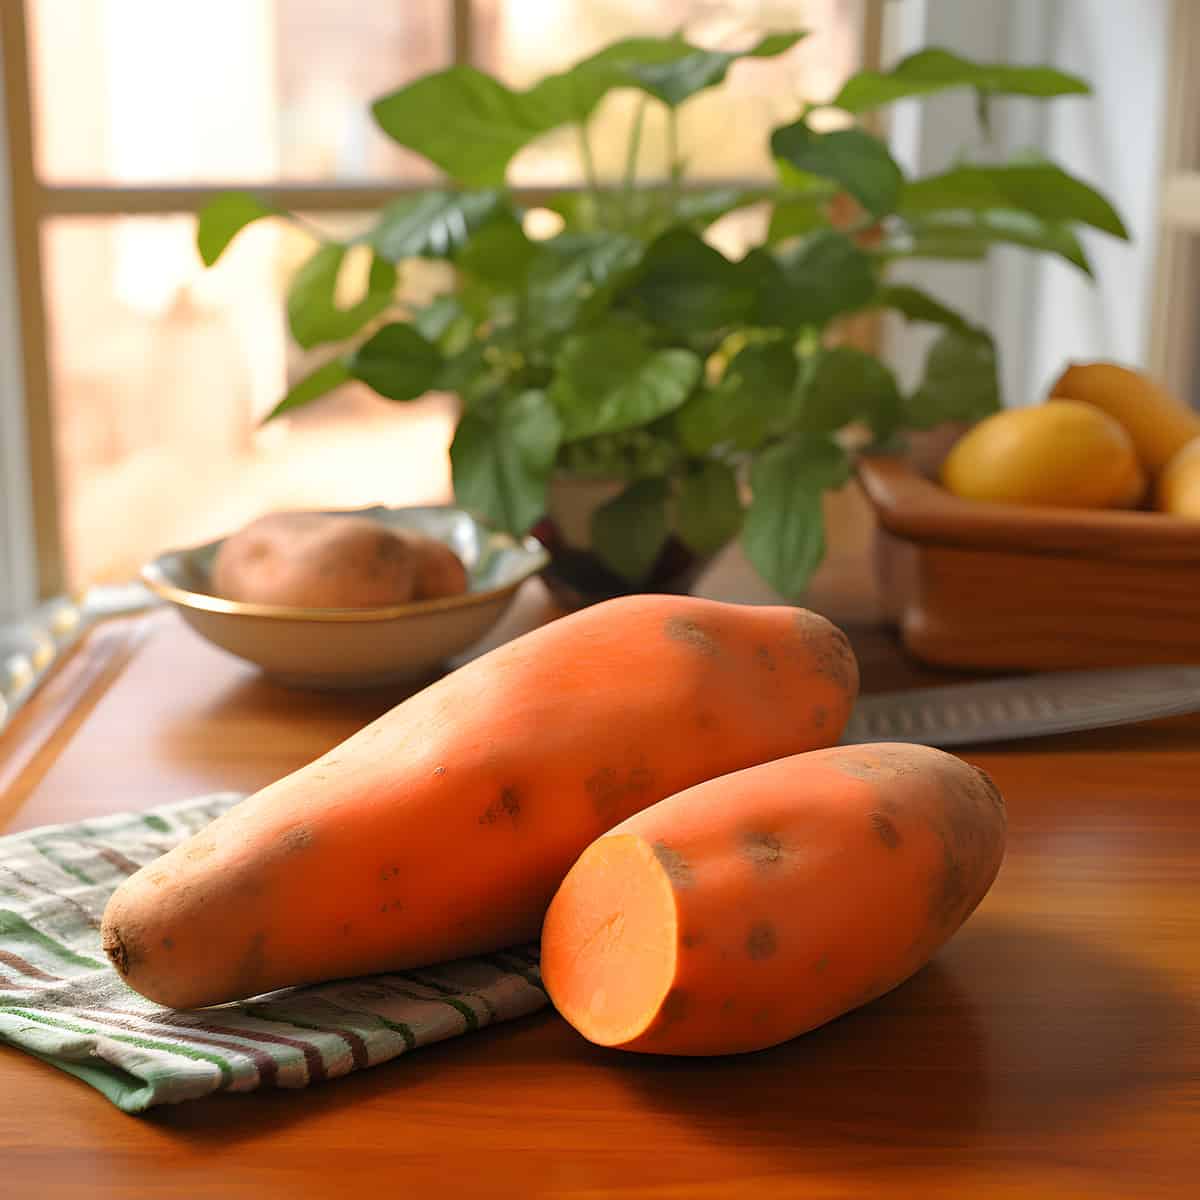 Jersey Orange Or Orange Little Stern Sweet Potatoes on a kitchen counter